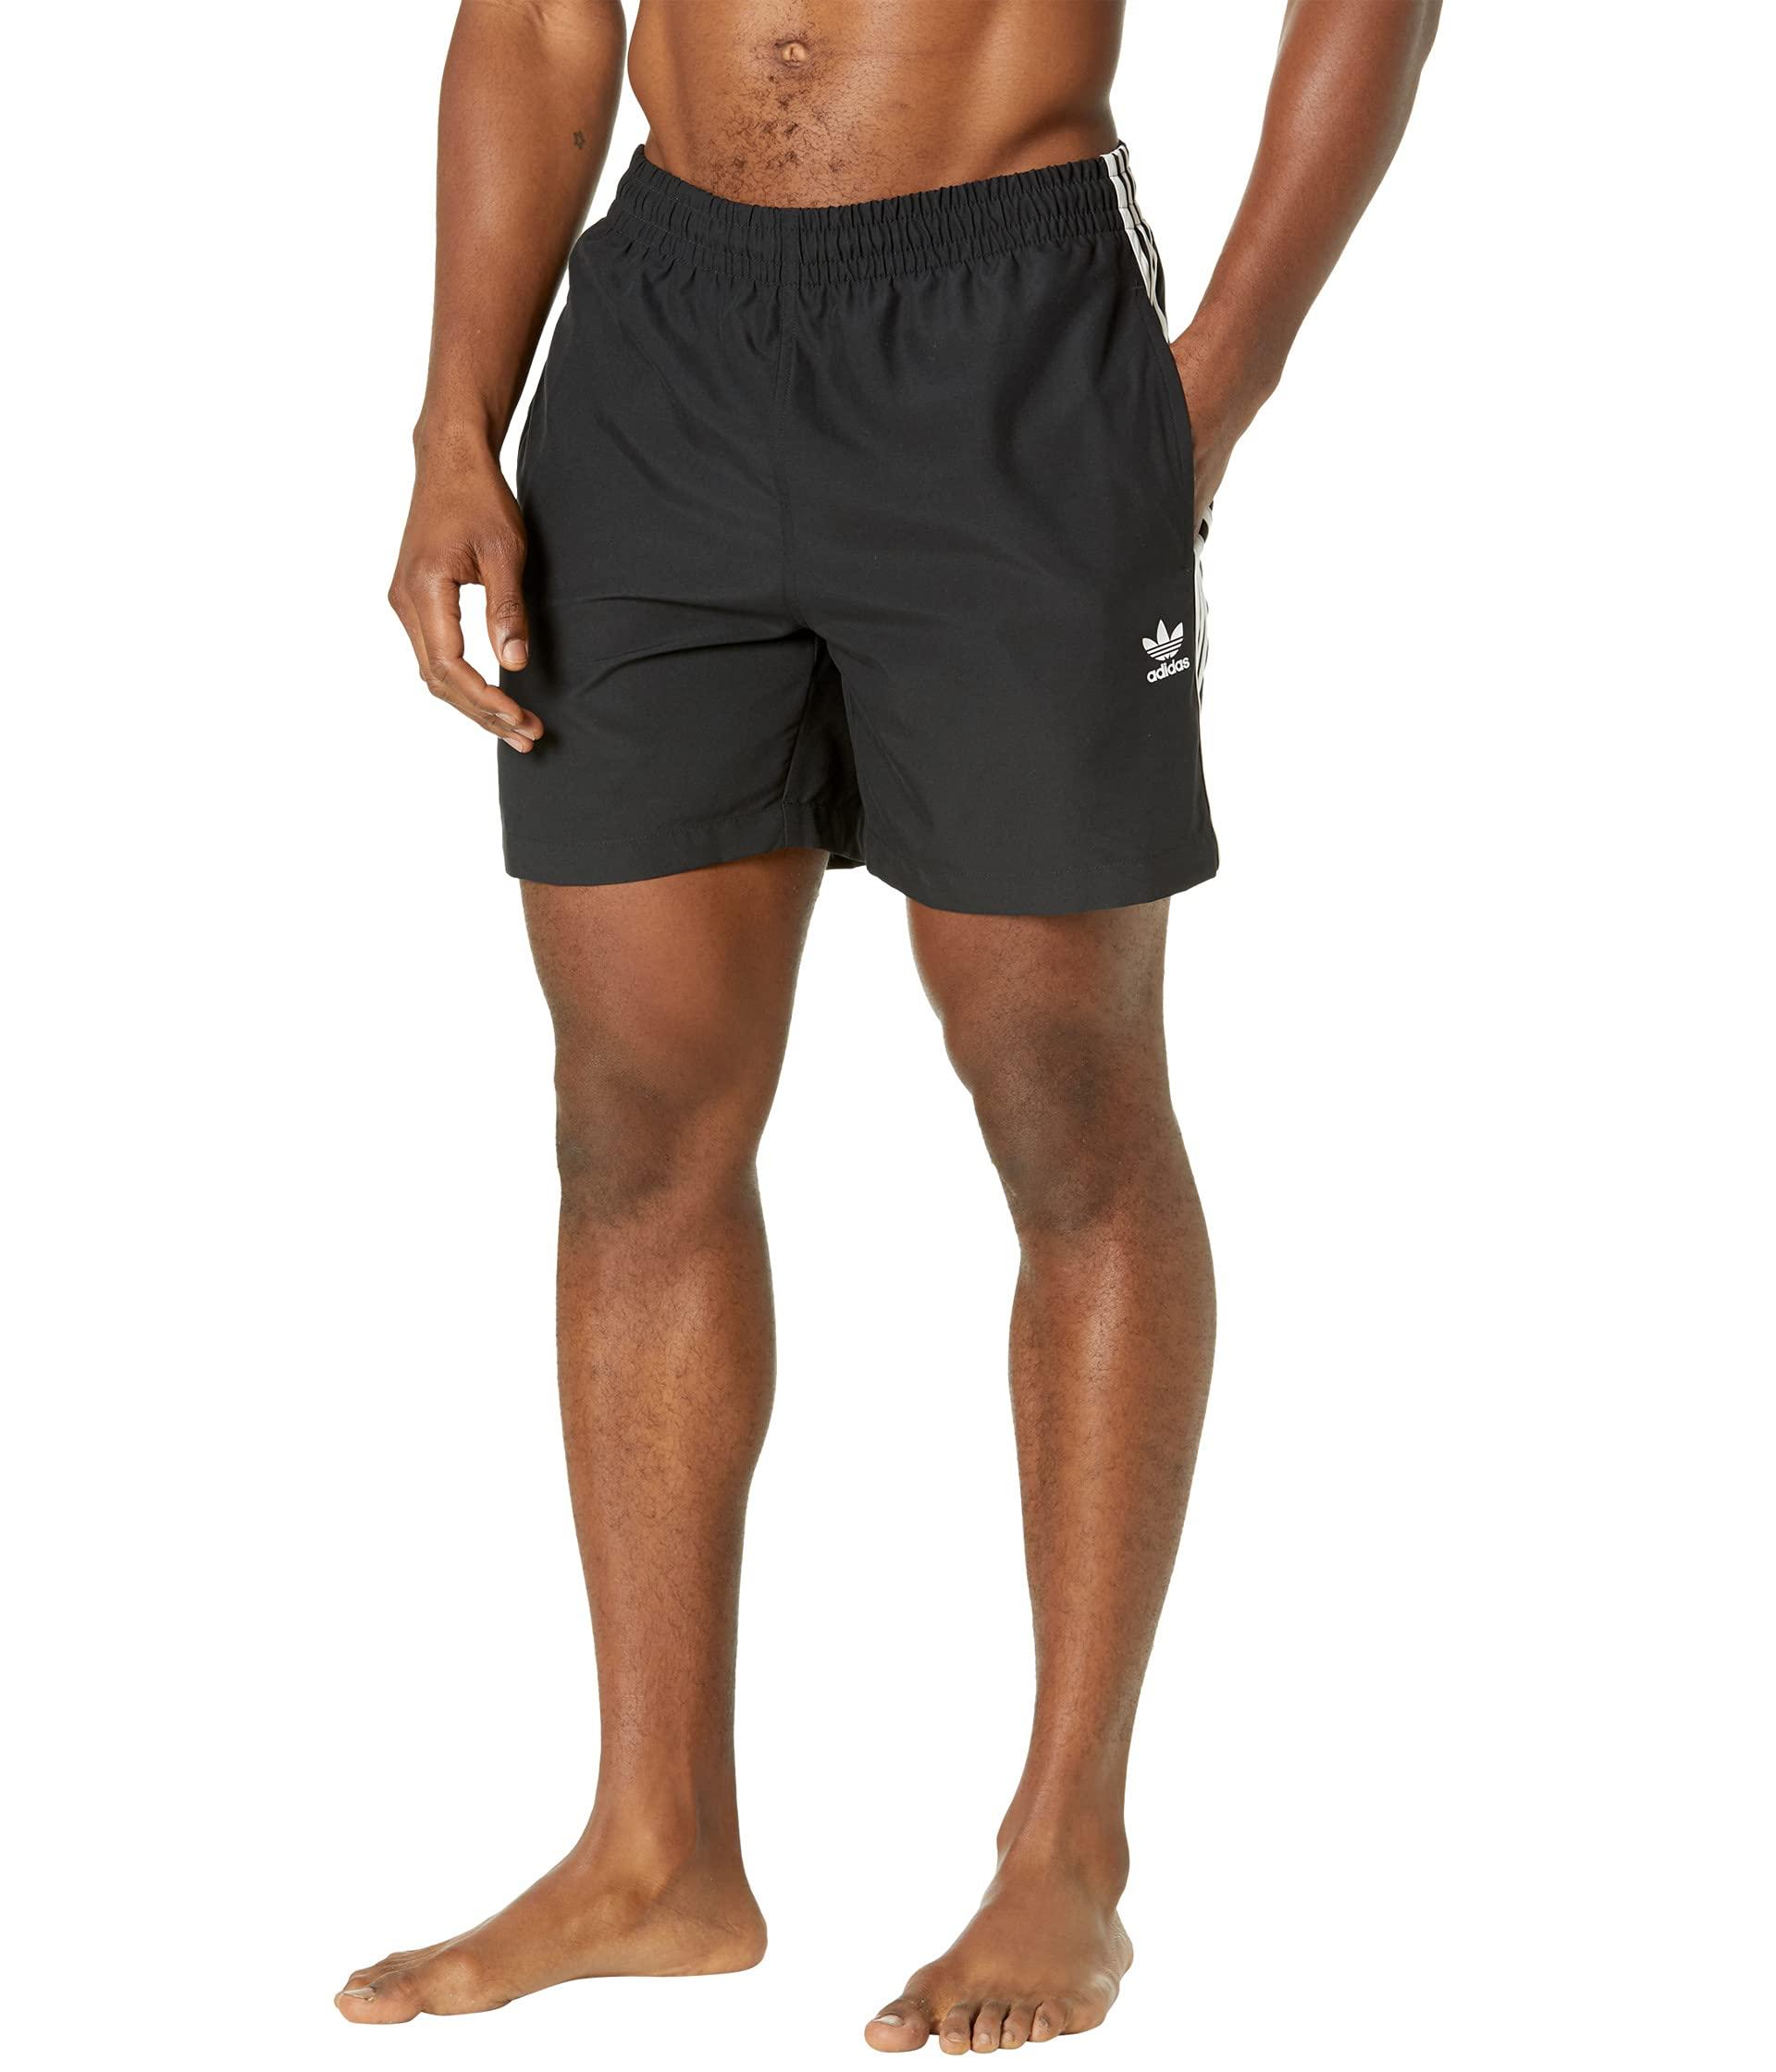 adidas Originals Synthetic 3-stripes Swim Shorts in Black for Men - Lyst